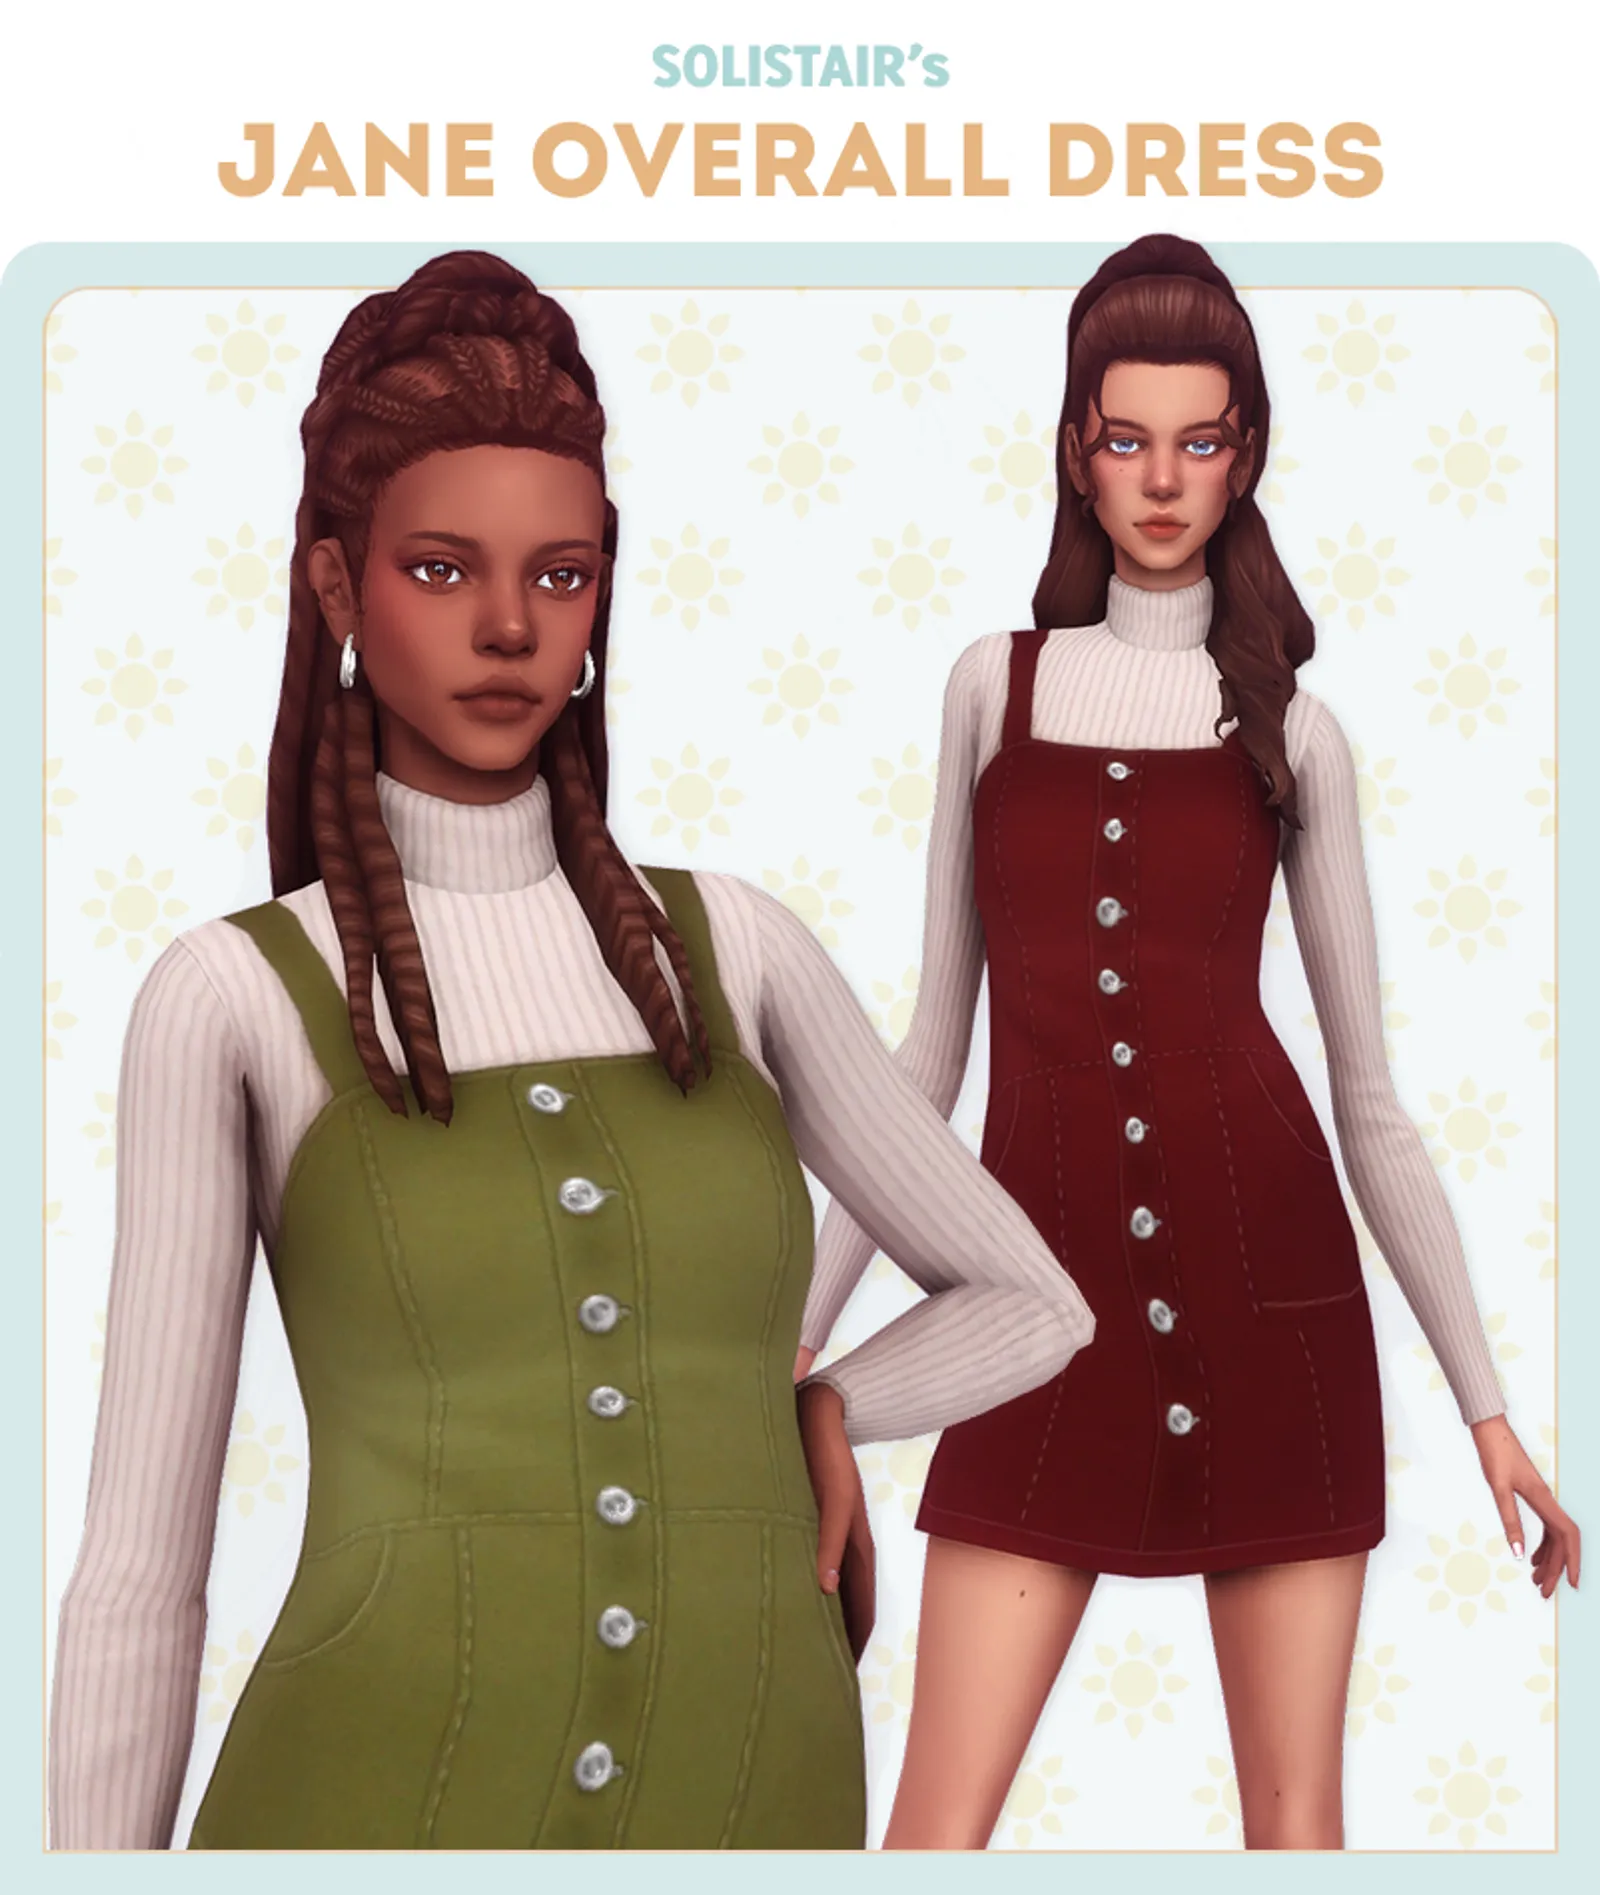 Jane Overall Dress